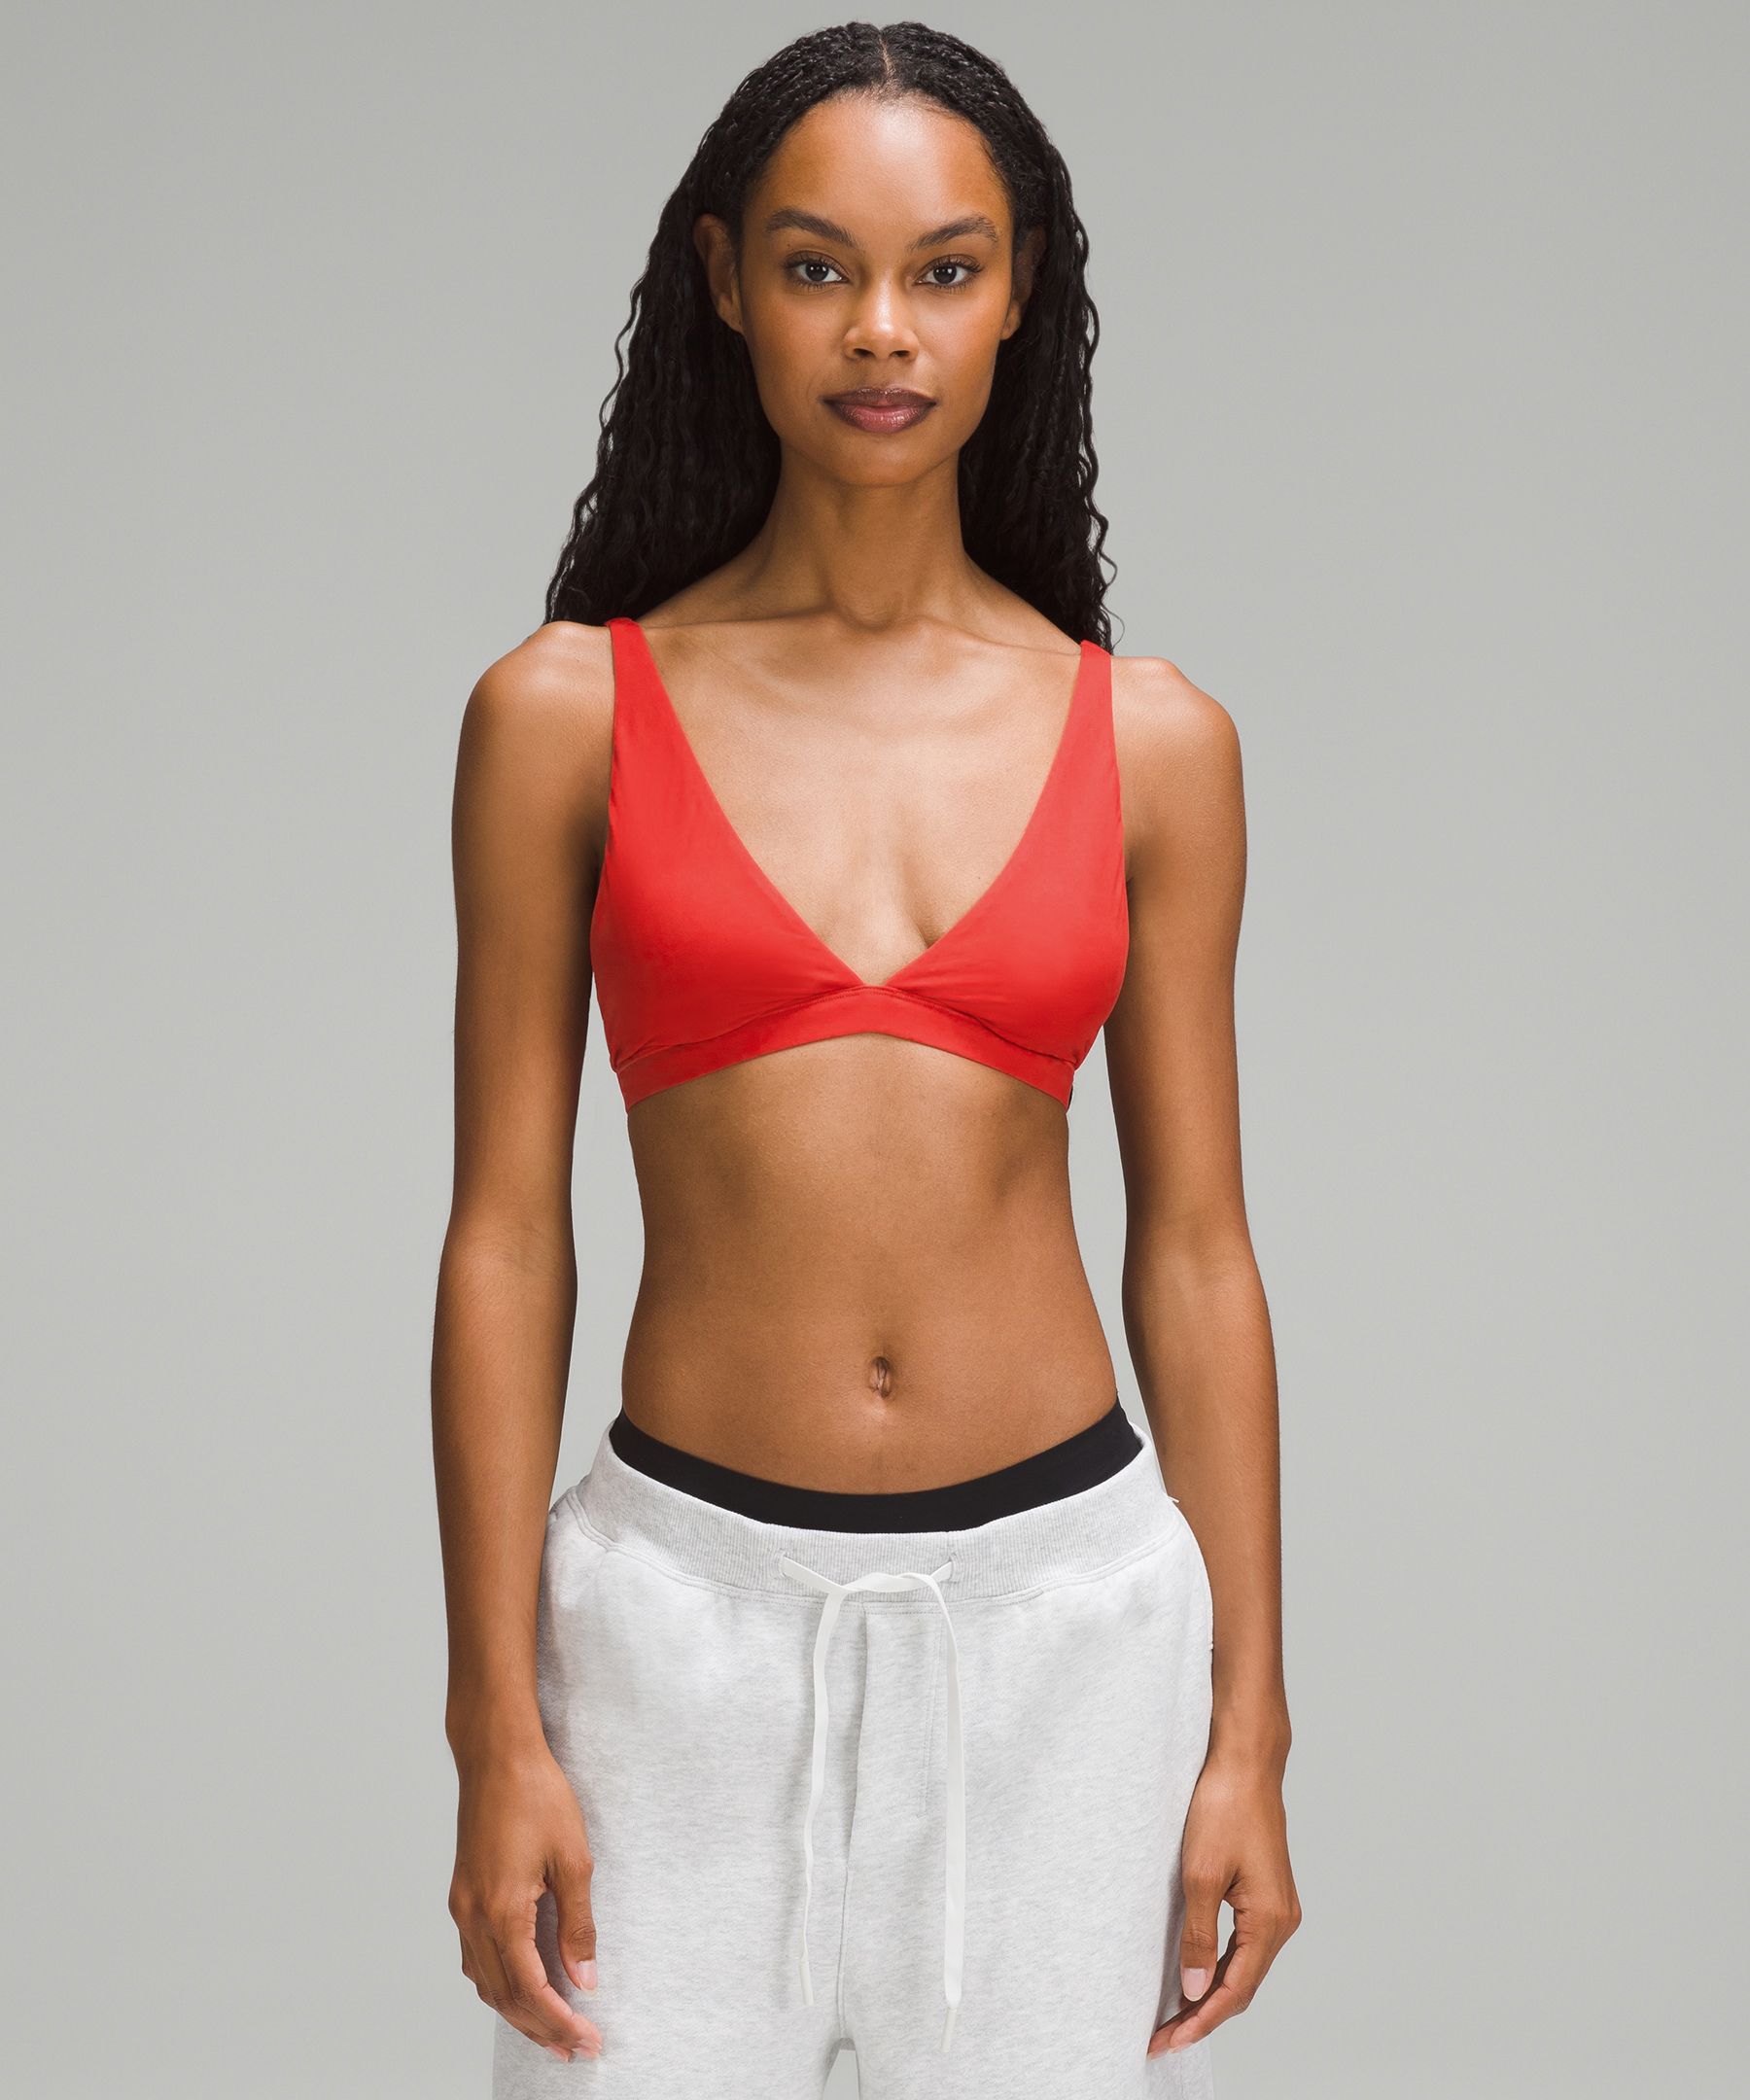 Lululemon Sports Bra Red Size 4 - $25 (56% Off Retail) - From Jenna